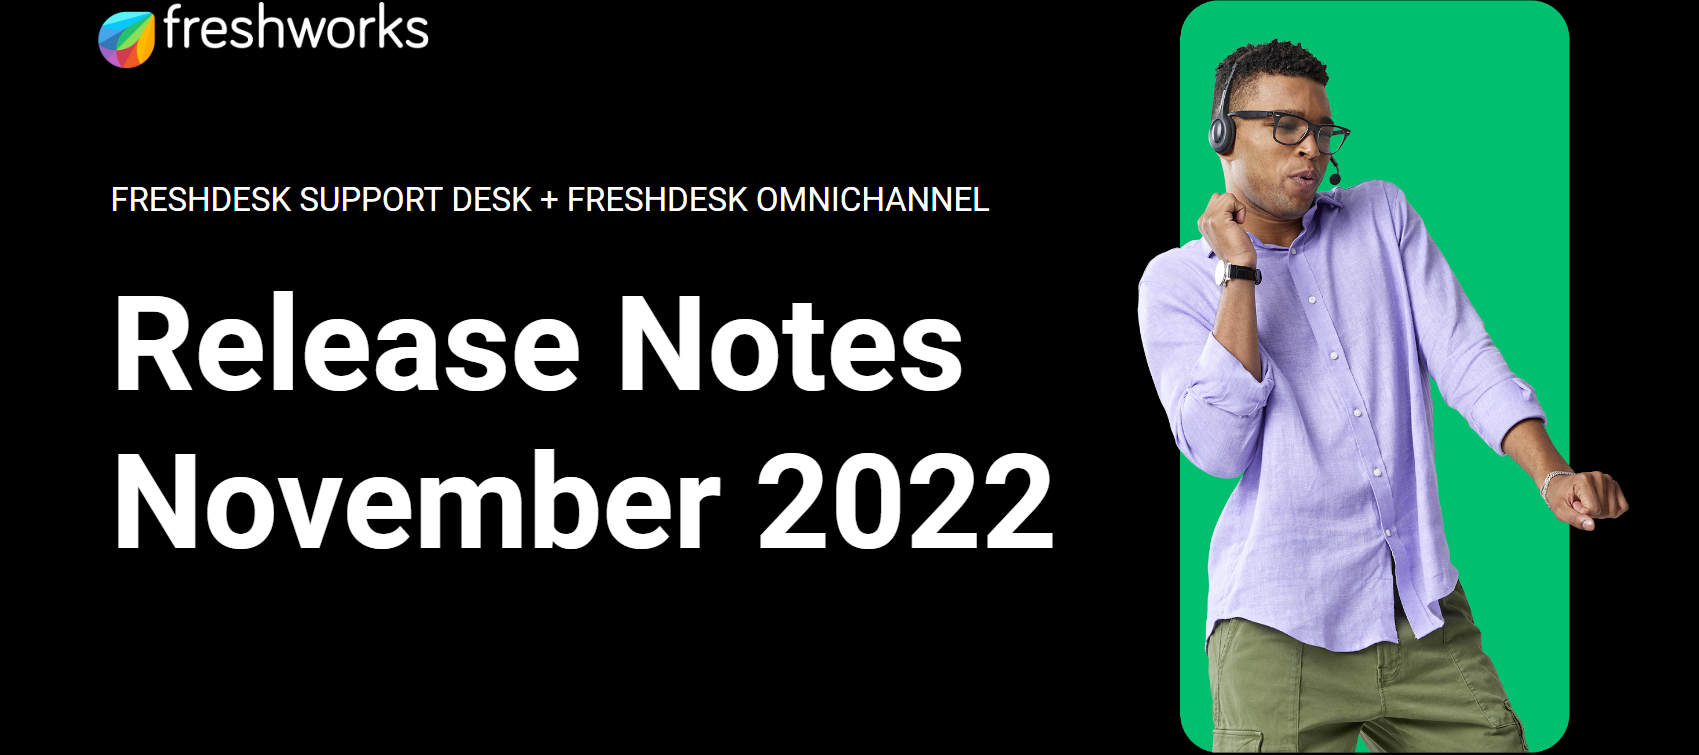 Freshdesk and Freshdesk Omnichannel Release Notes - November 2022